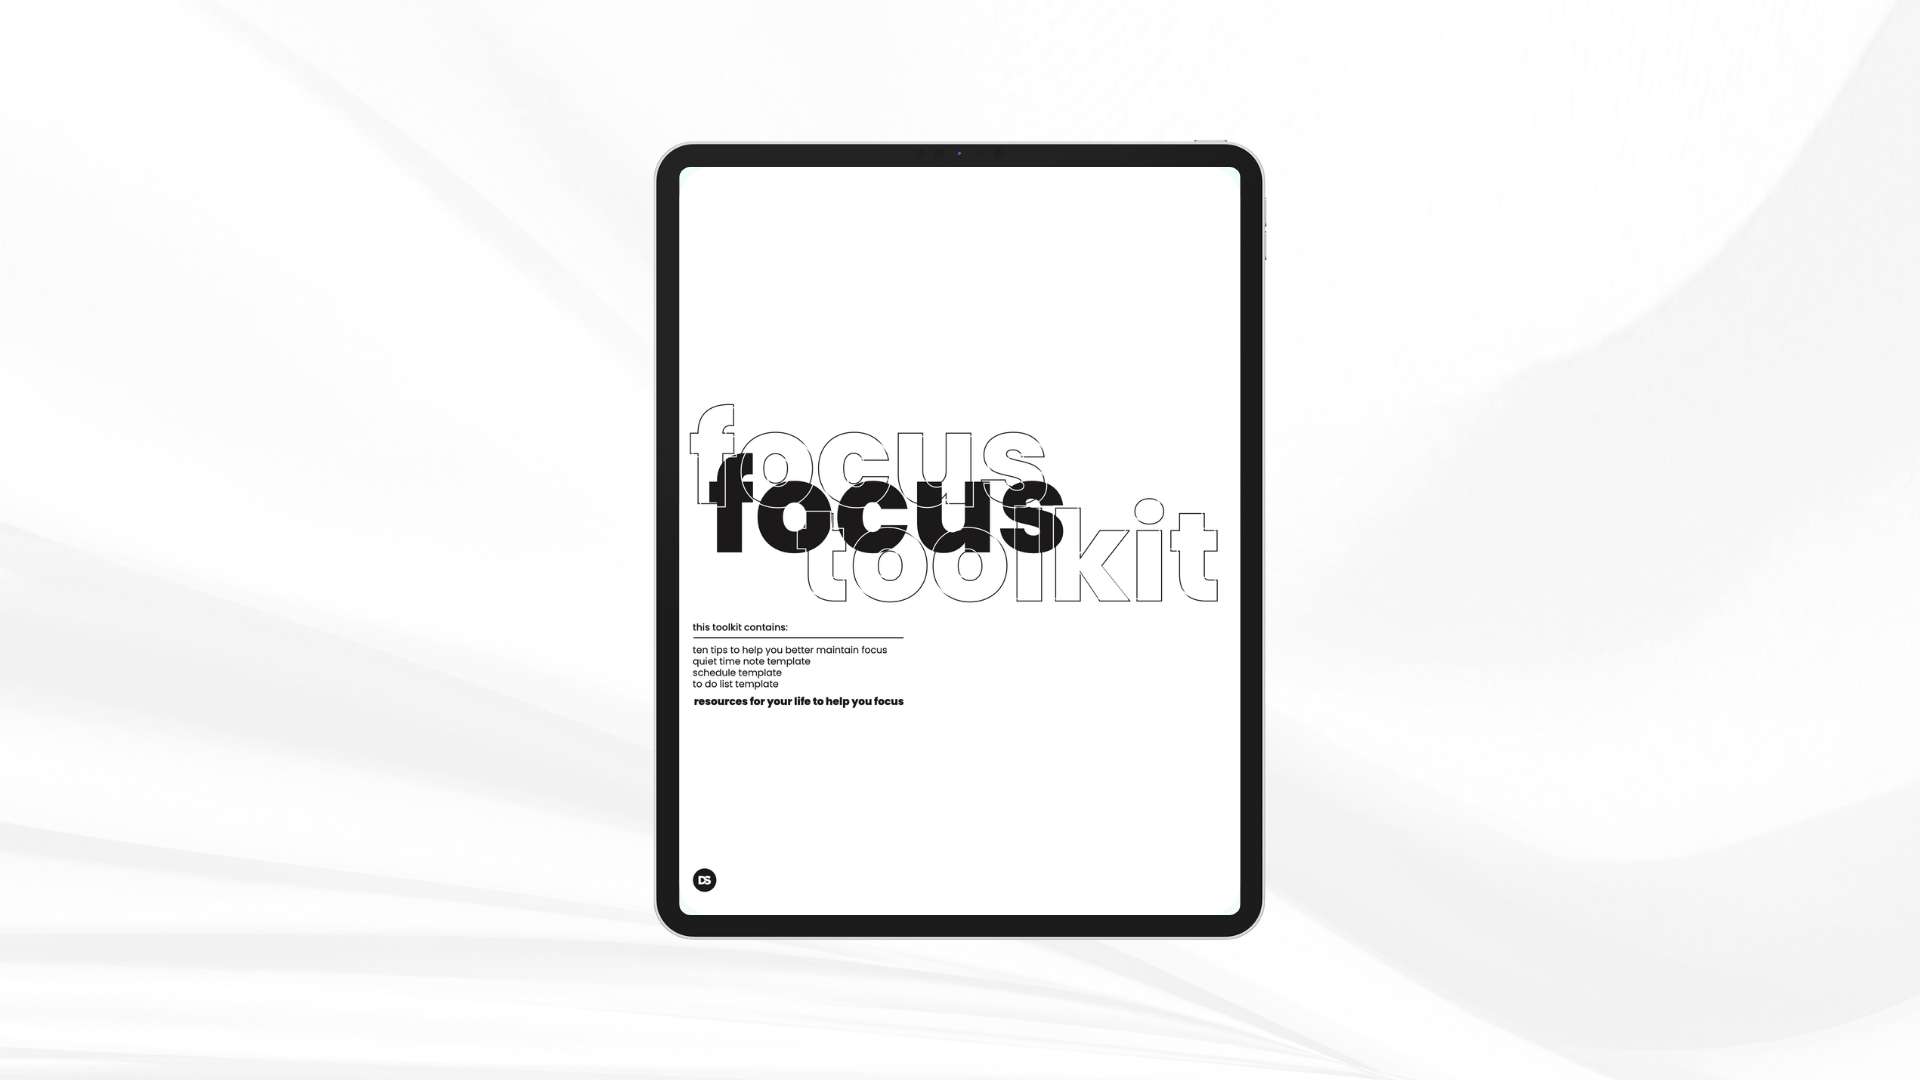 The Focus Toolkit 1